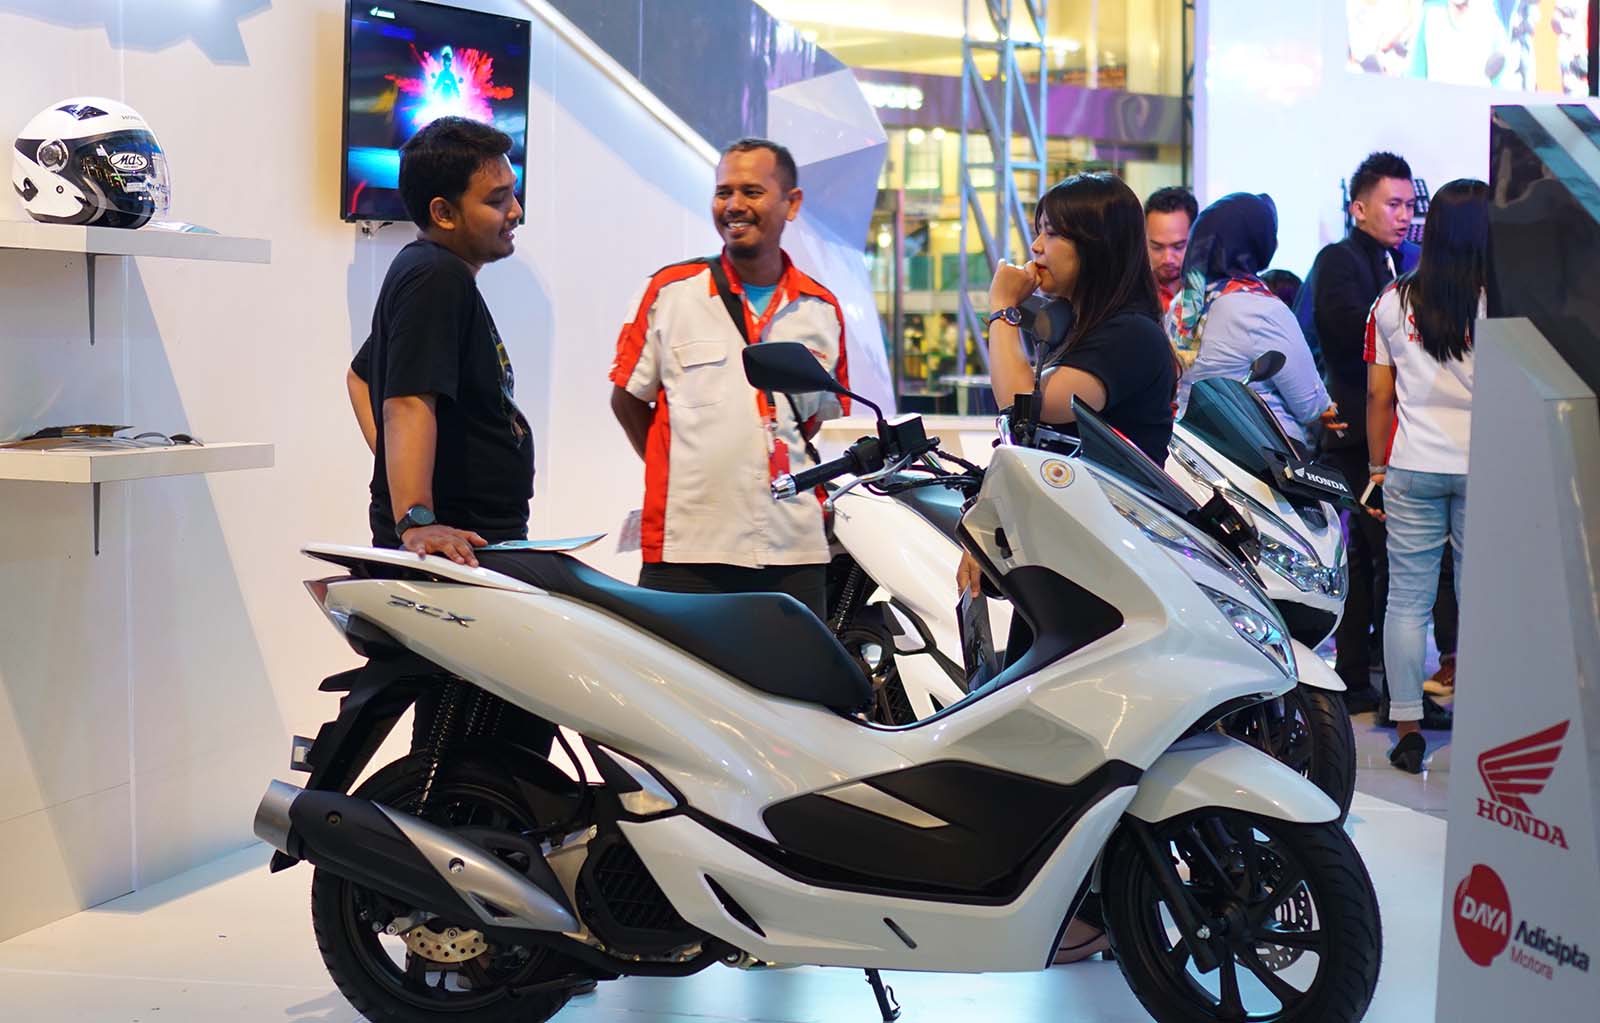 Honda Premium Matic Day 2019 Sambangi Kota Bekasi, Perkenalkan Teknologi Terbaru